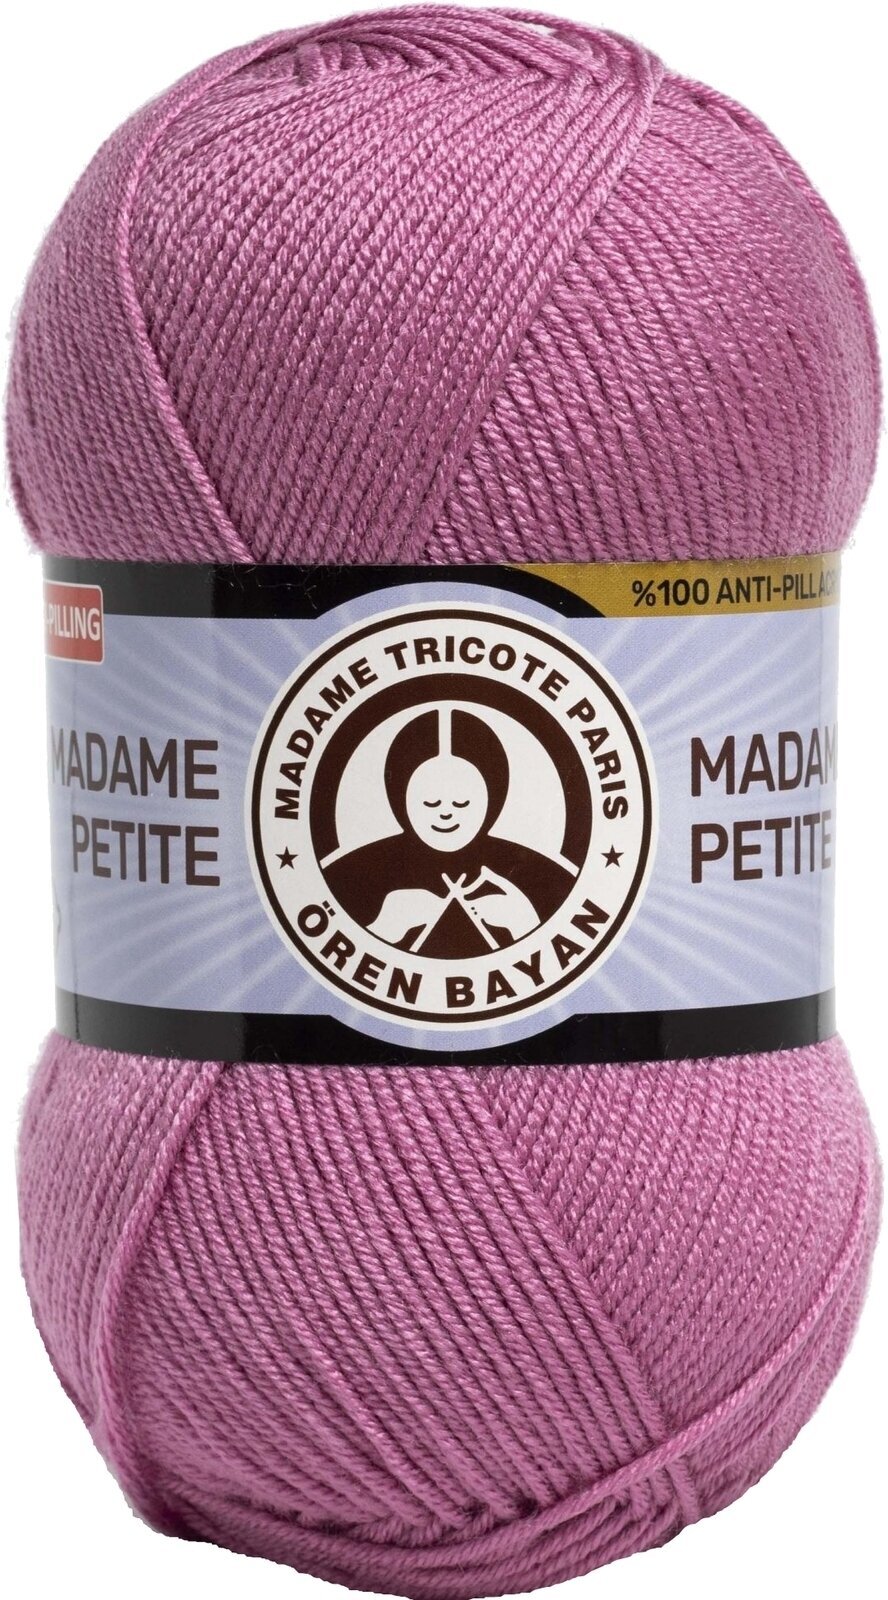 Strickgarn Madame Tricote Paris Madame Petite 3848 49 Strickgarn